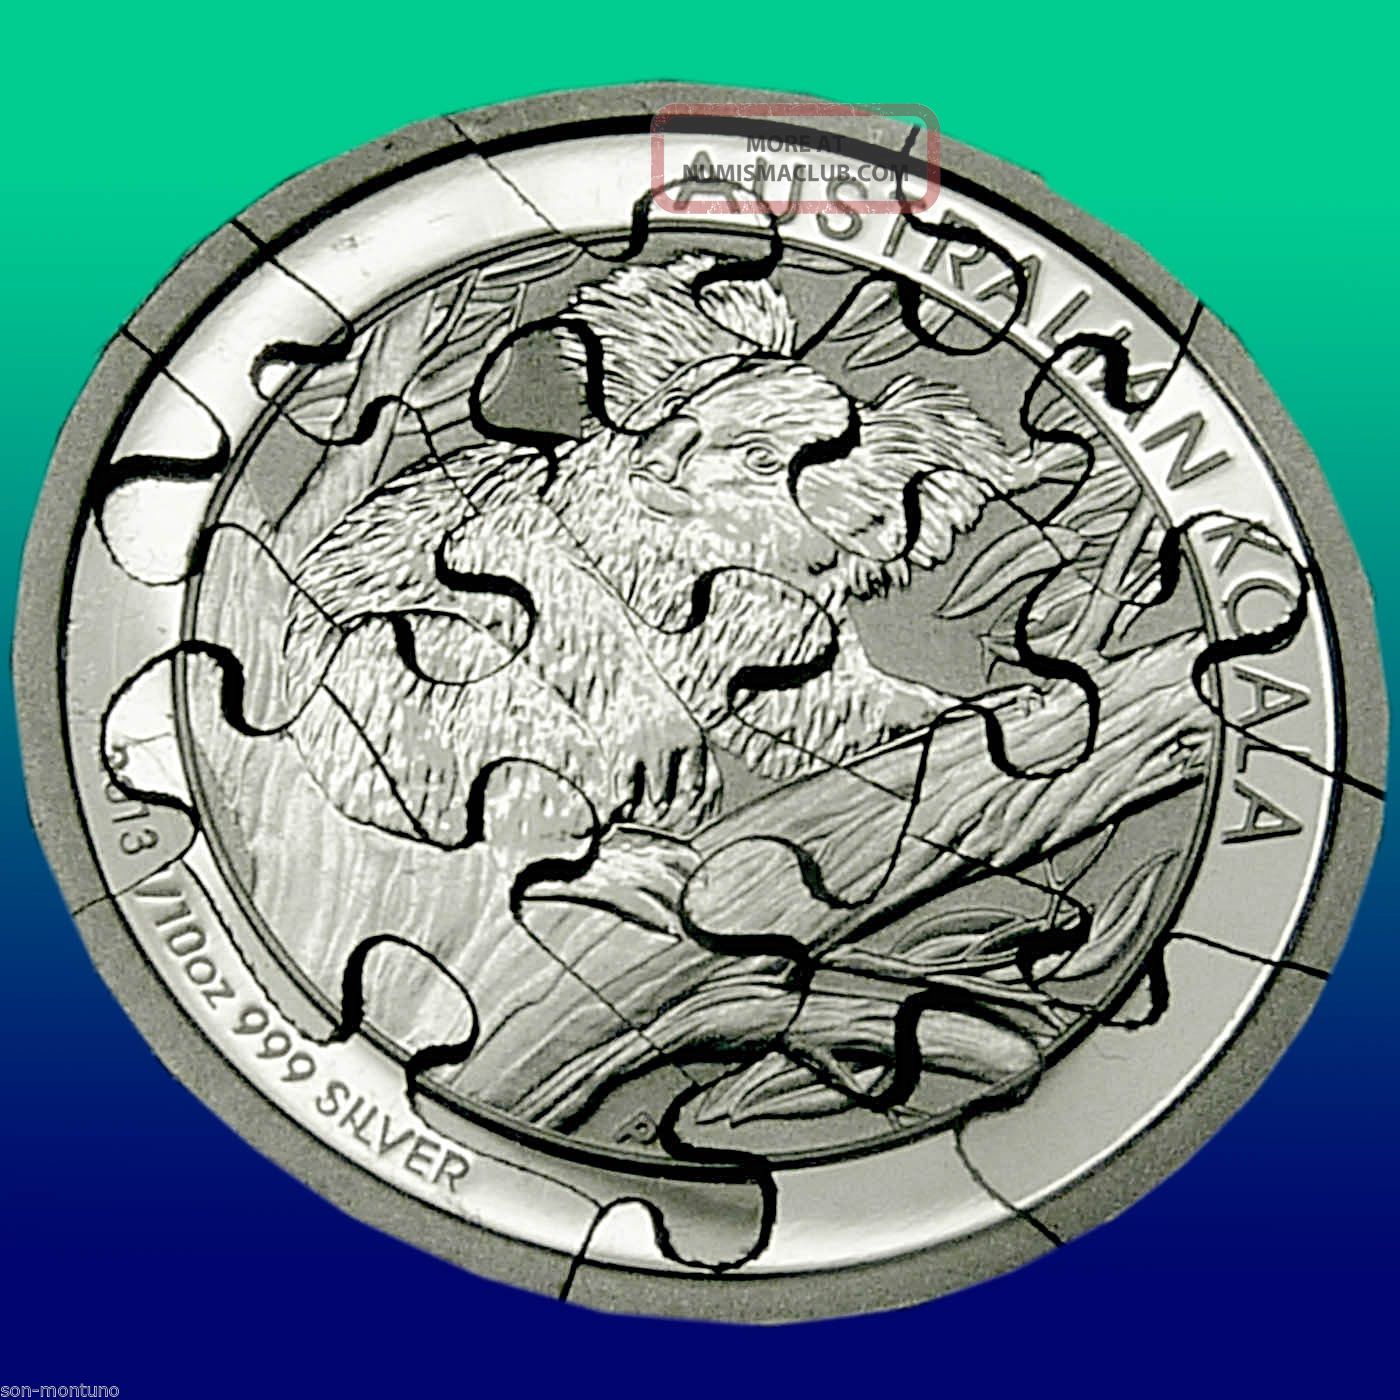 2013_australian_koala_jigsaw_puzzle_coin_110_tenth_oz_silver_bullion_australia_1_lgw.jpg